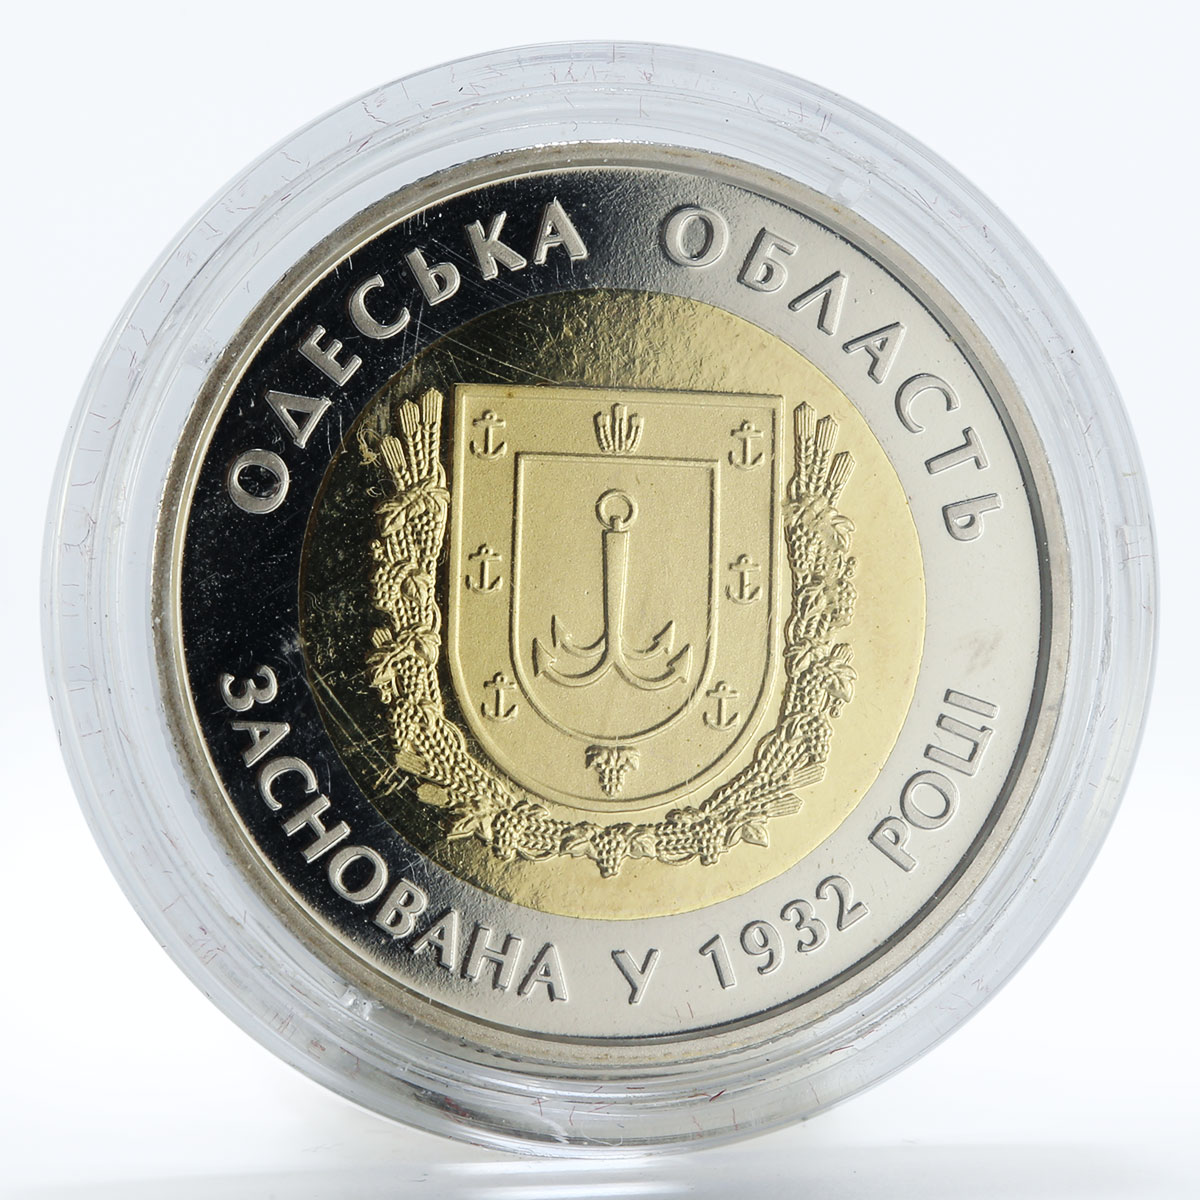 Ukraine 5 hryvnias 85 years of Odessa region bimetal coin 2017